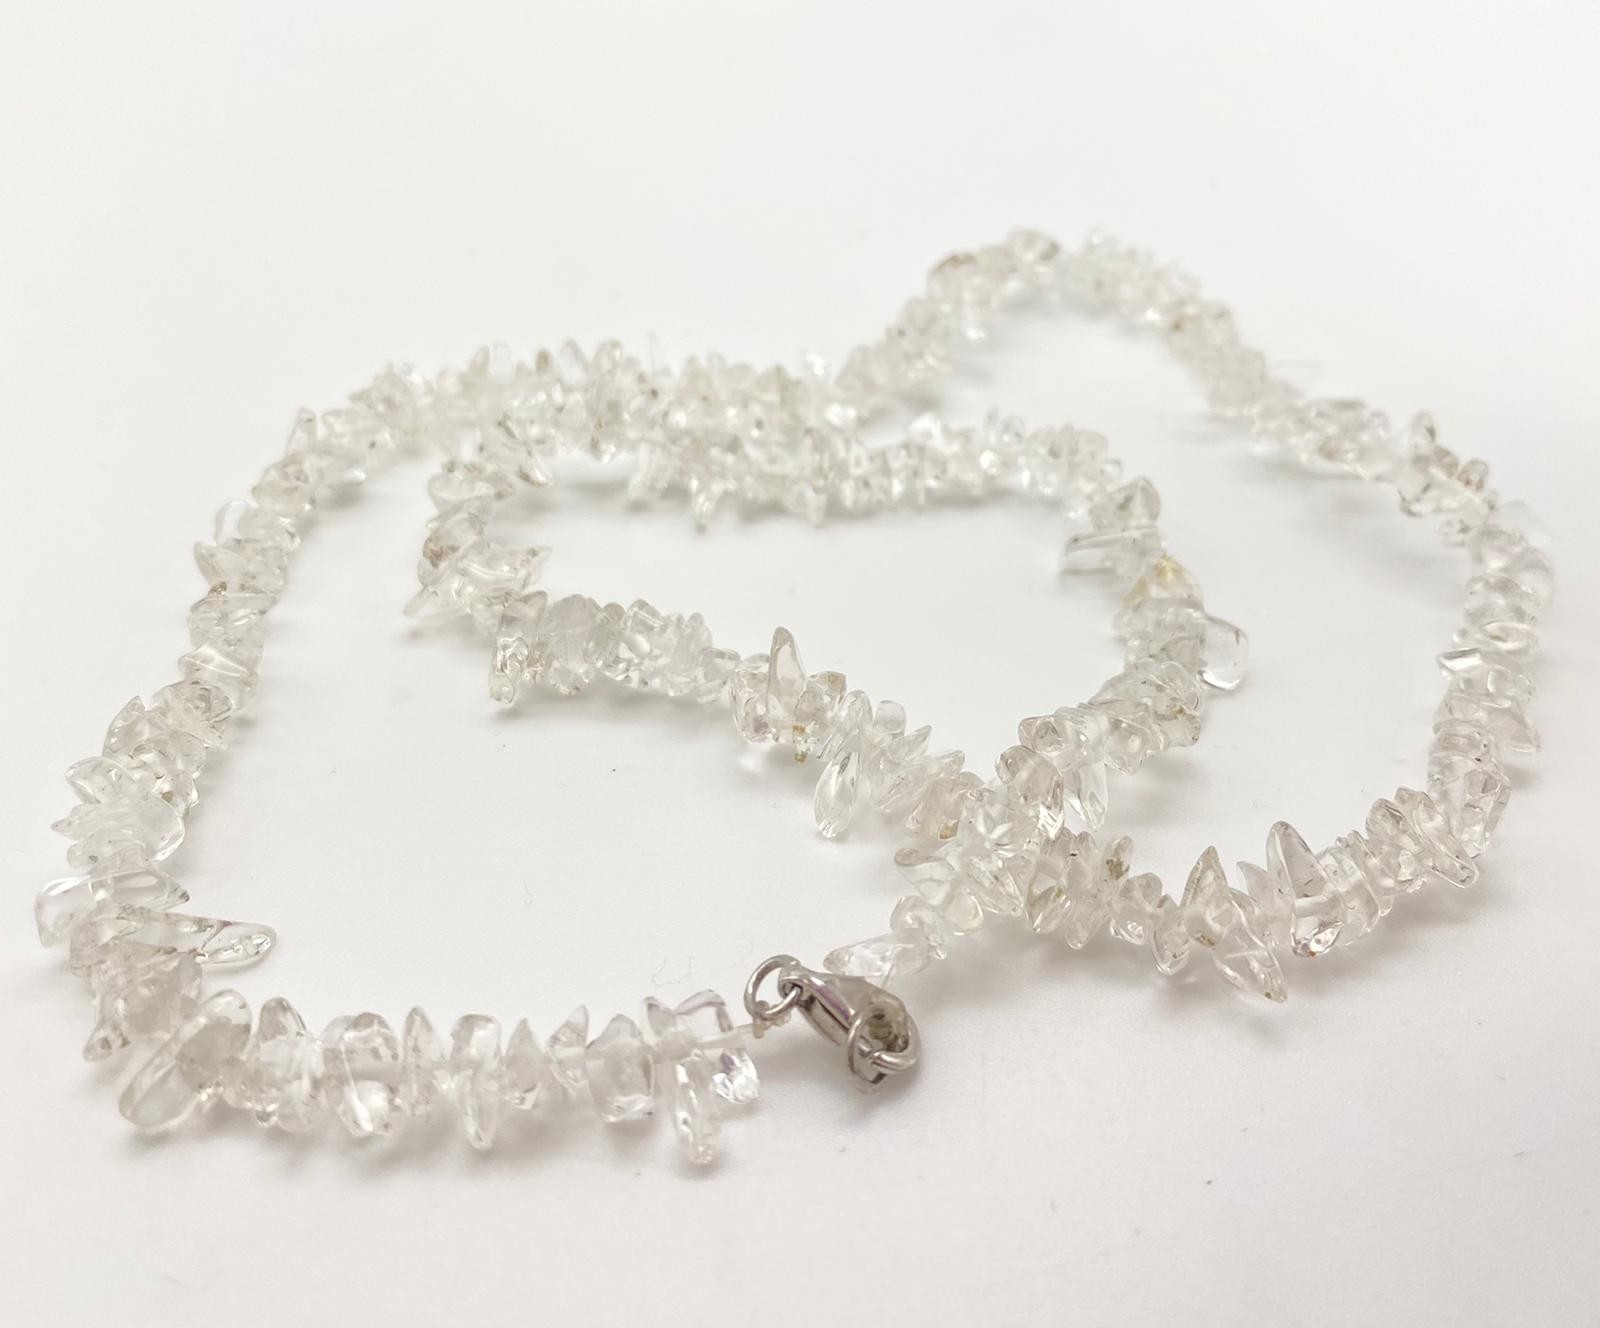 A Rock Crystal Necklace. 40cm. 18g